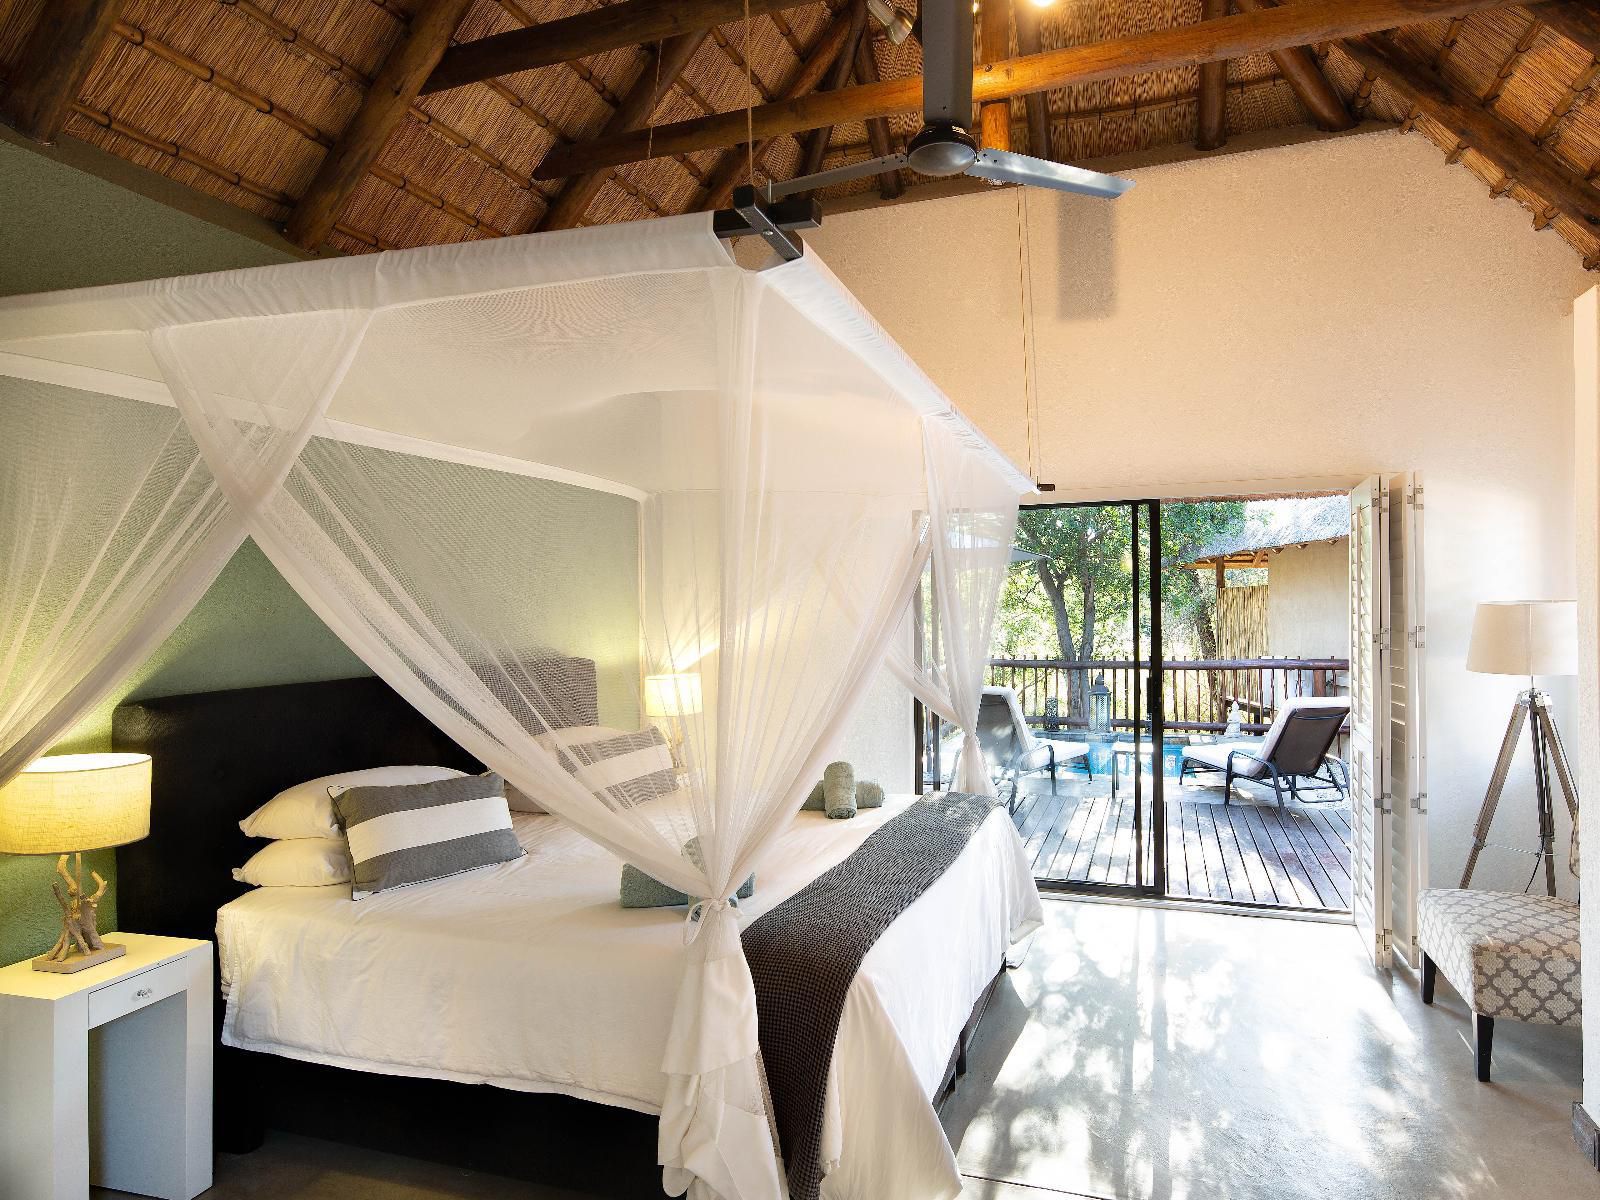 Bushbaby River Lodge Hoedspruit Limpopo Province South Africa Bedroom